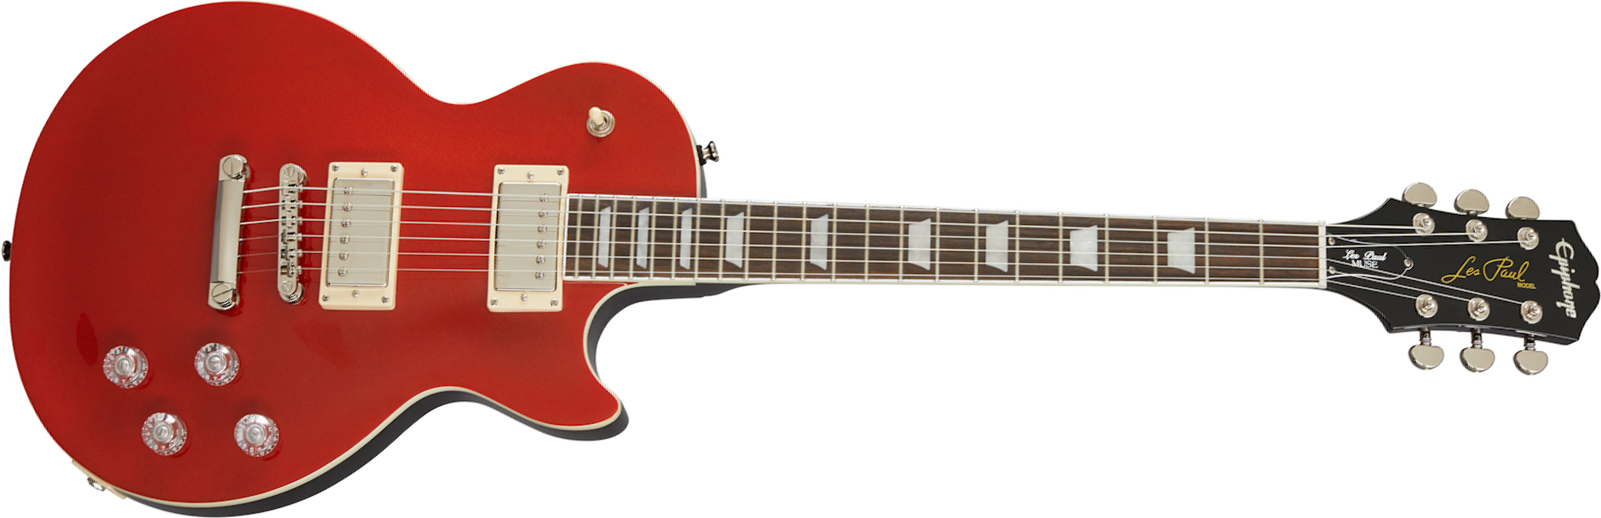 Epiphone Les Paul Muse Modern 2h Ht Lau - Scarlet Red Metallic - Enkel gesneden elektrische gitaar - Main picture